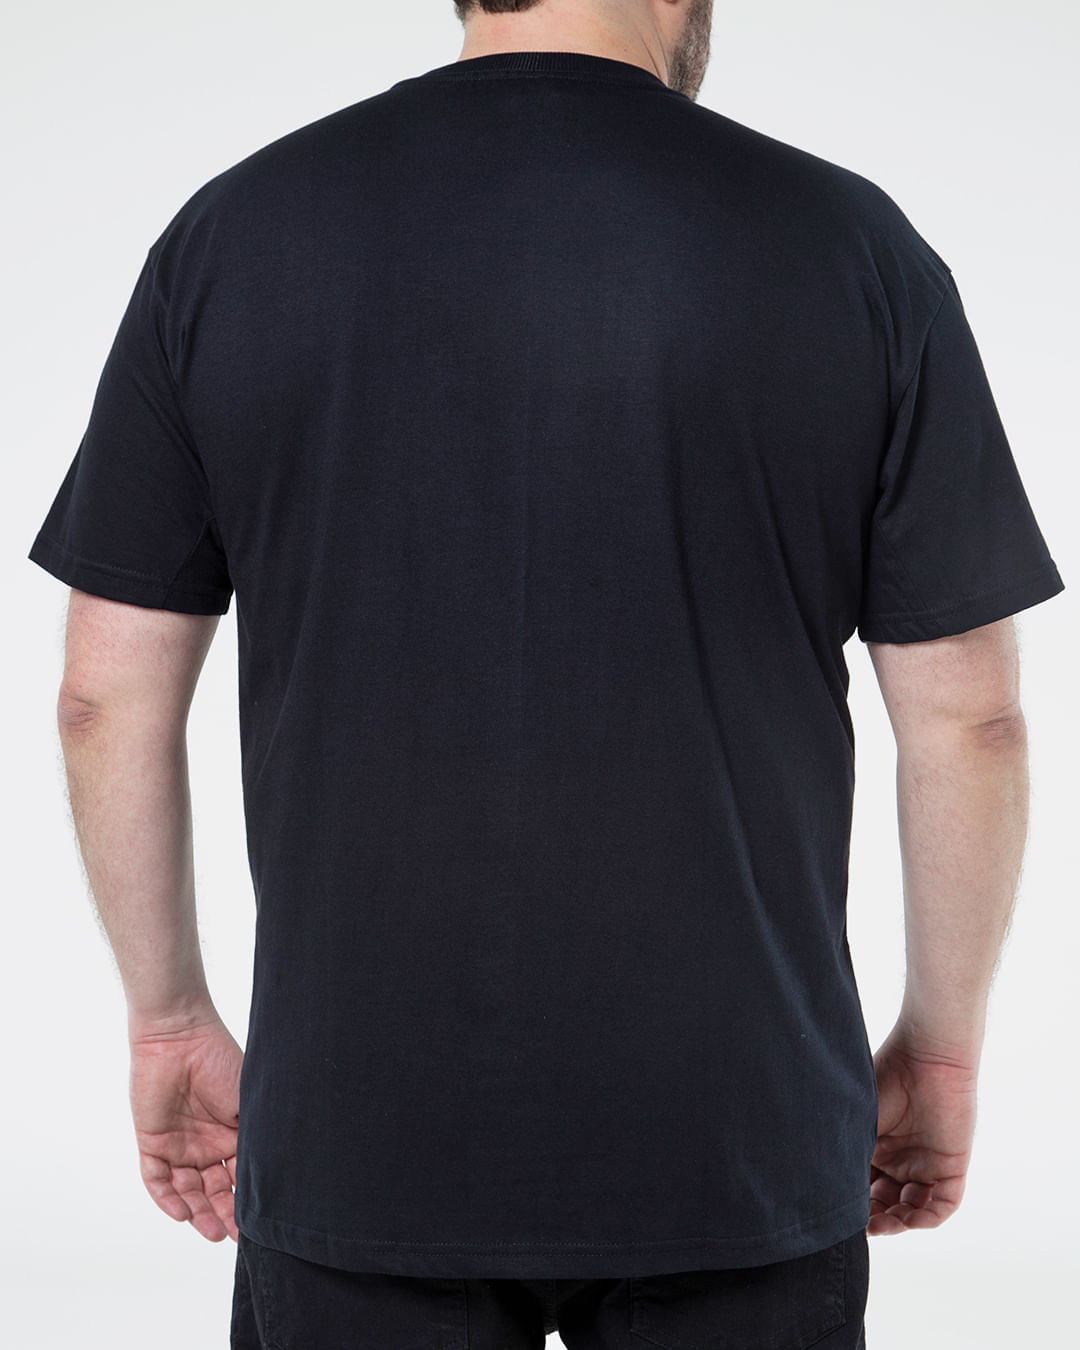 Camiseta-Masculina-Plus-Size-Estampada-Ecko-Preta